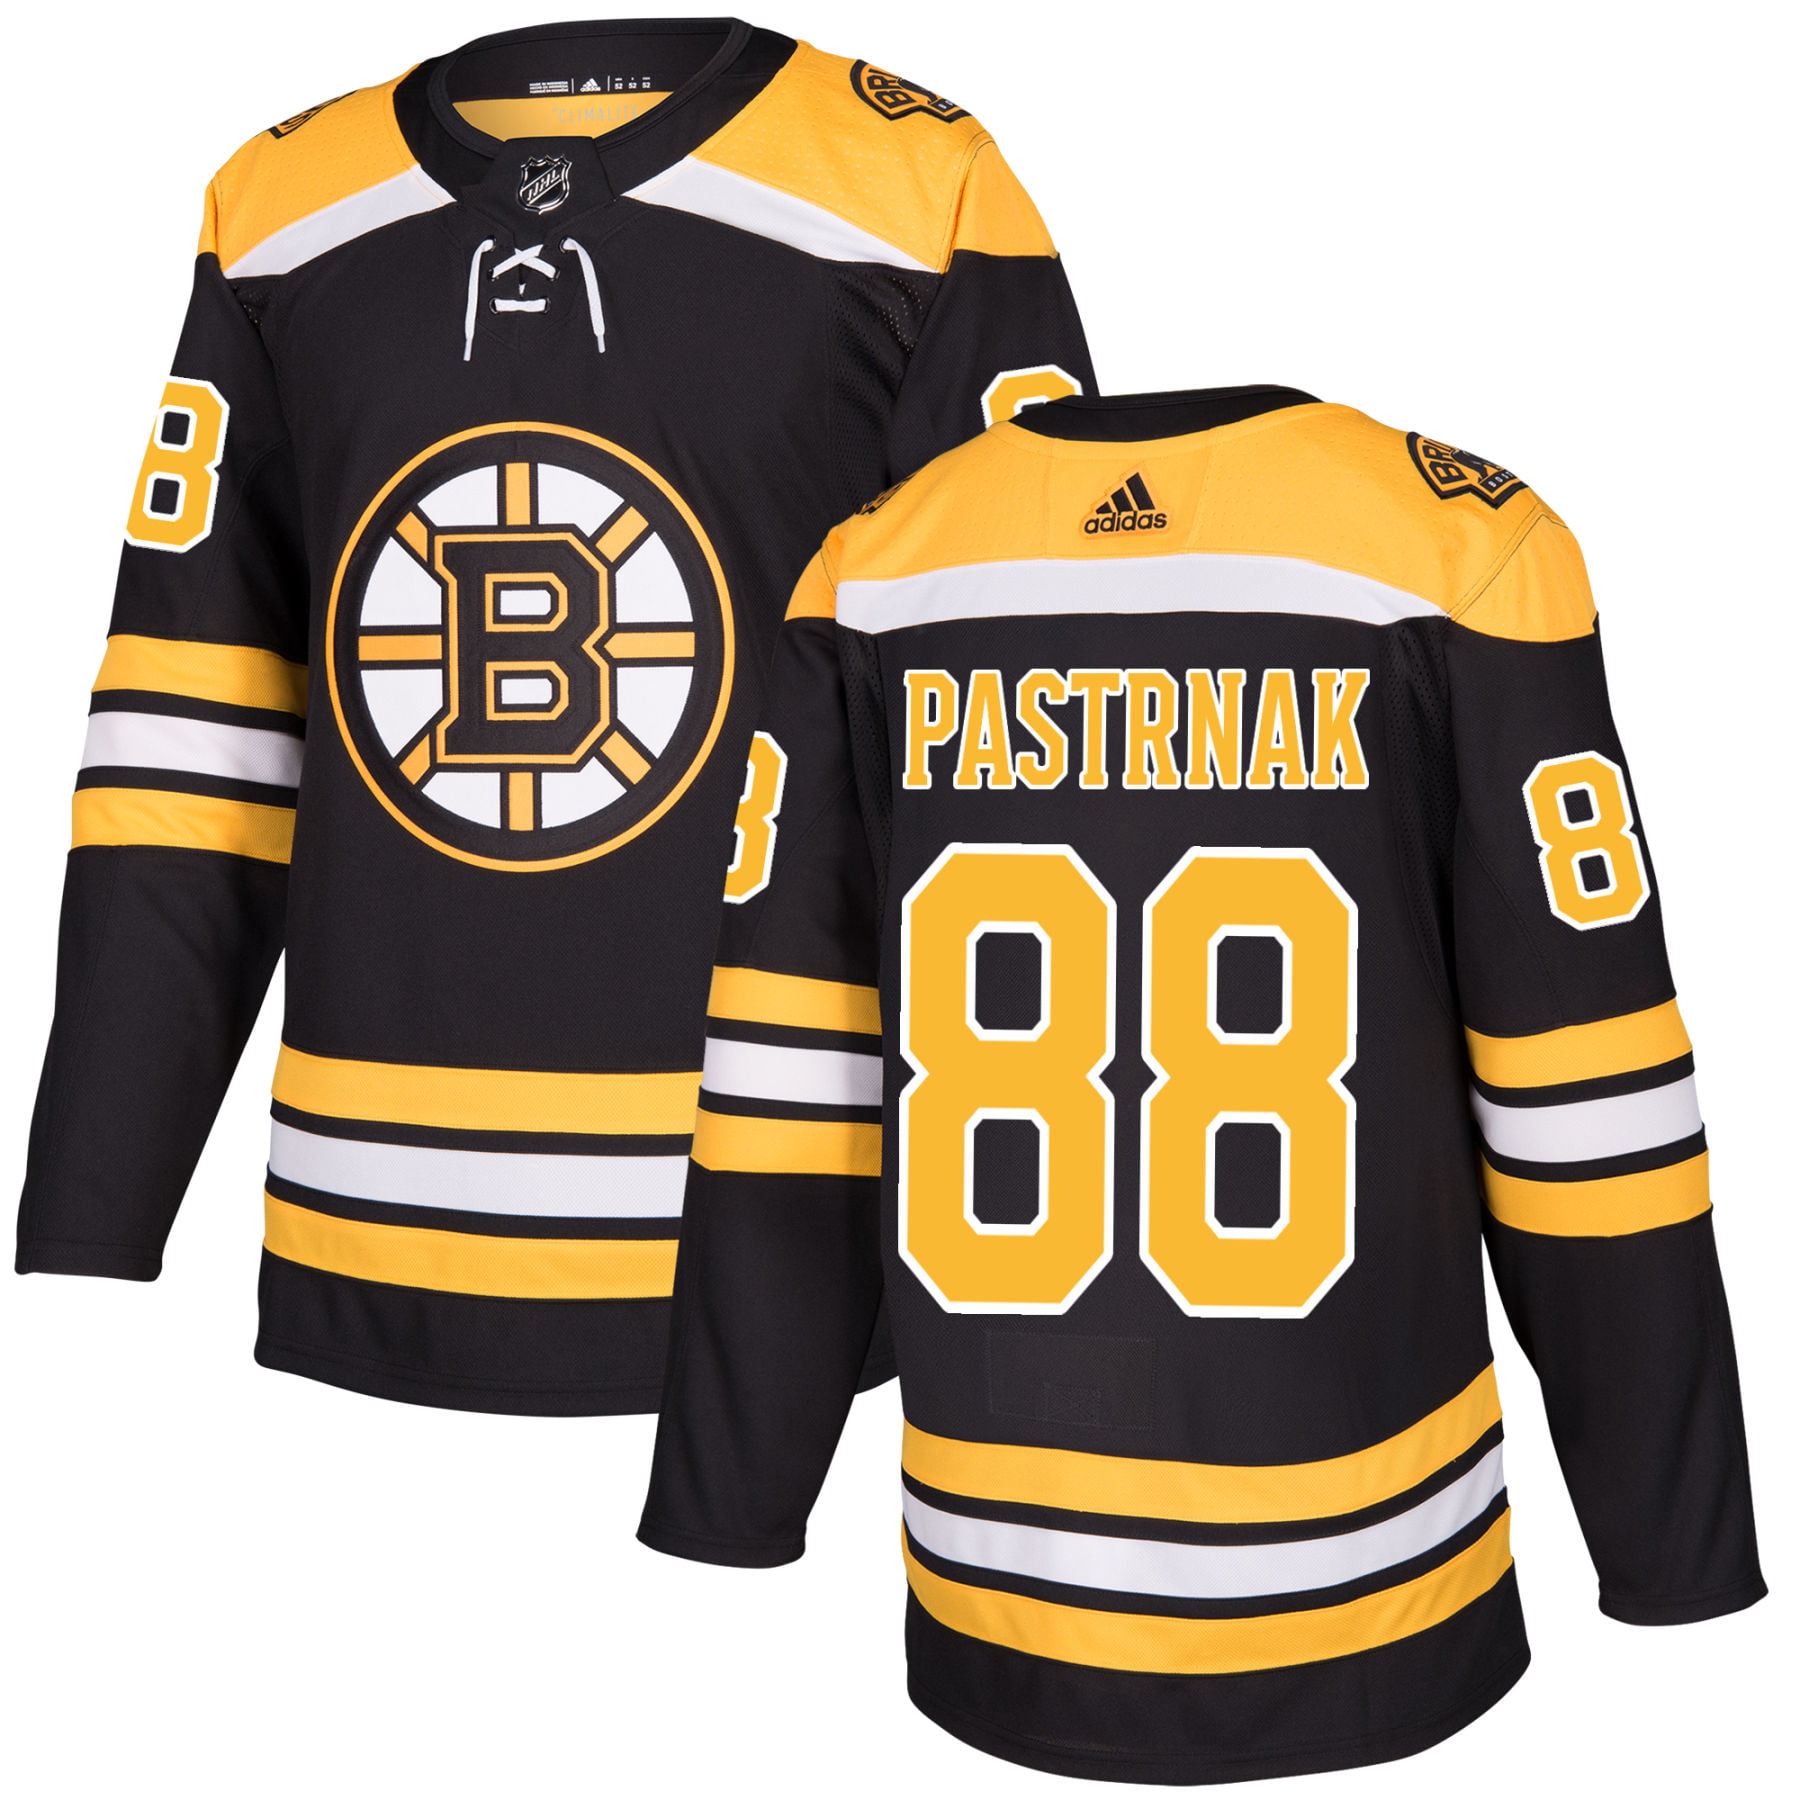 David Pastrnak Boston Bruins adidas Authentic Player Jersey - Black